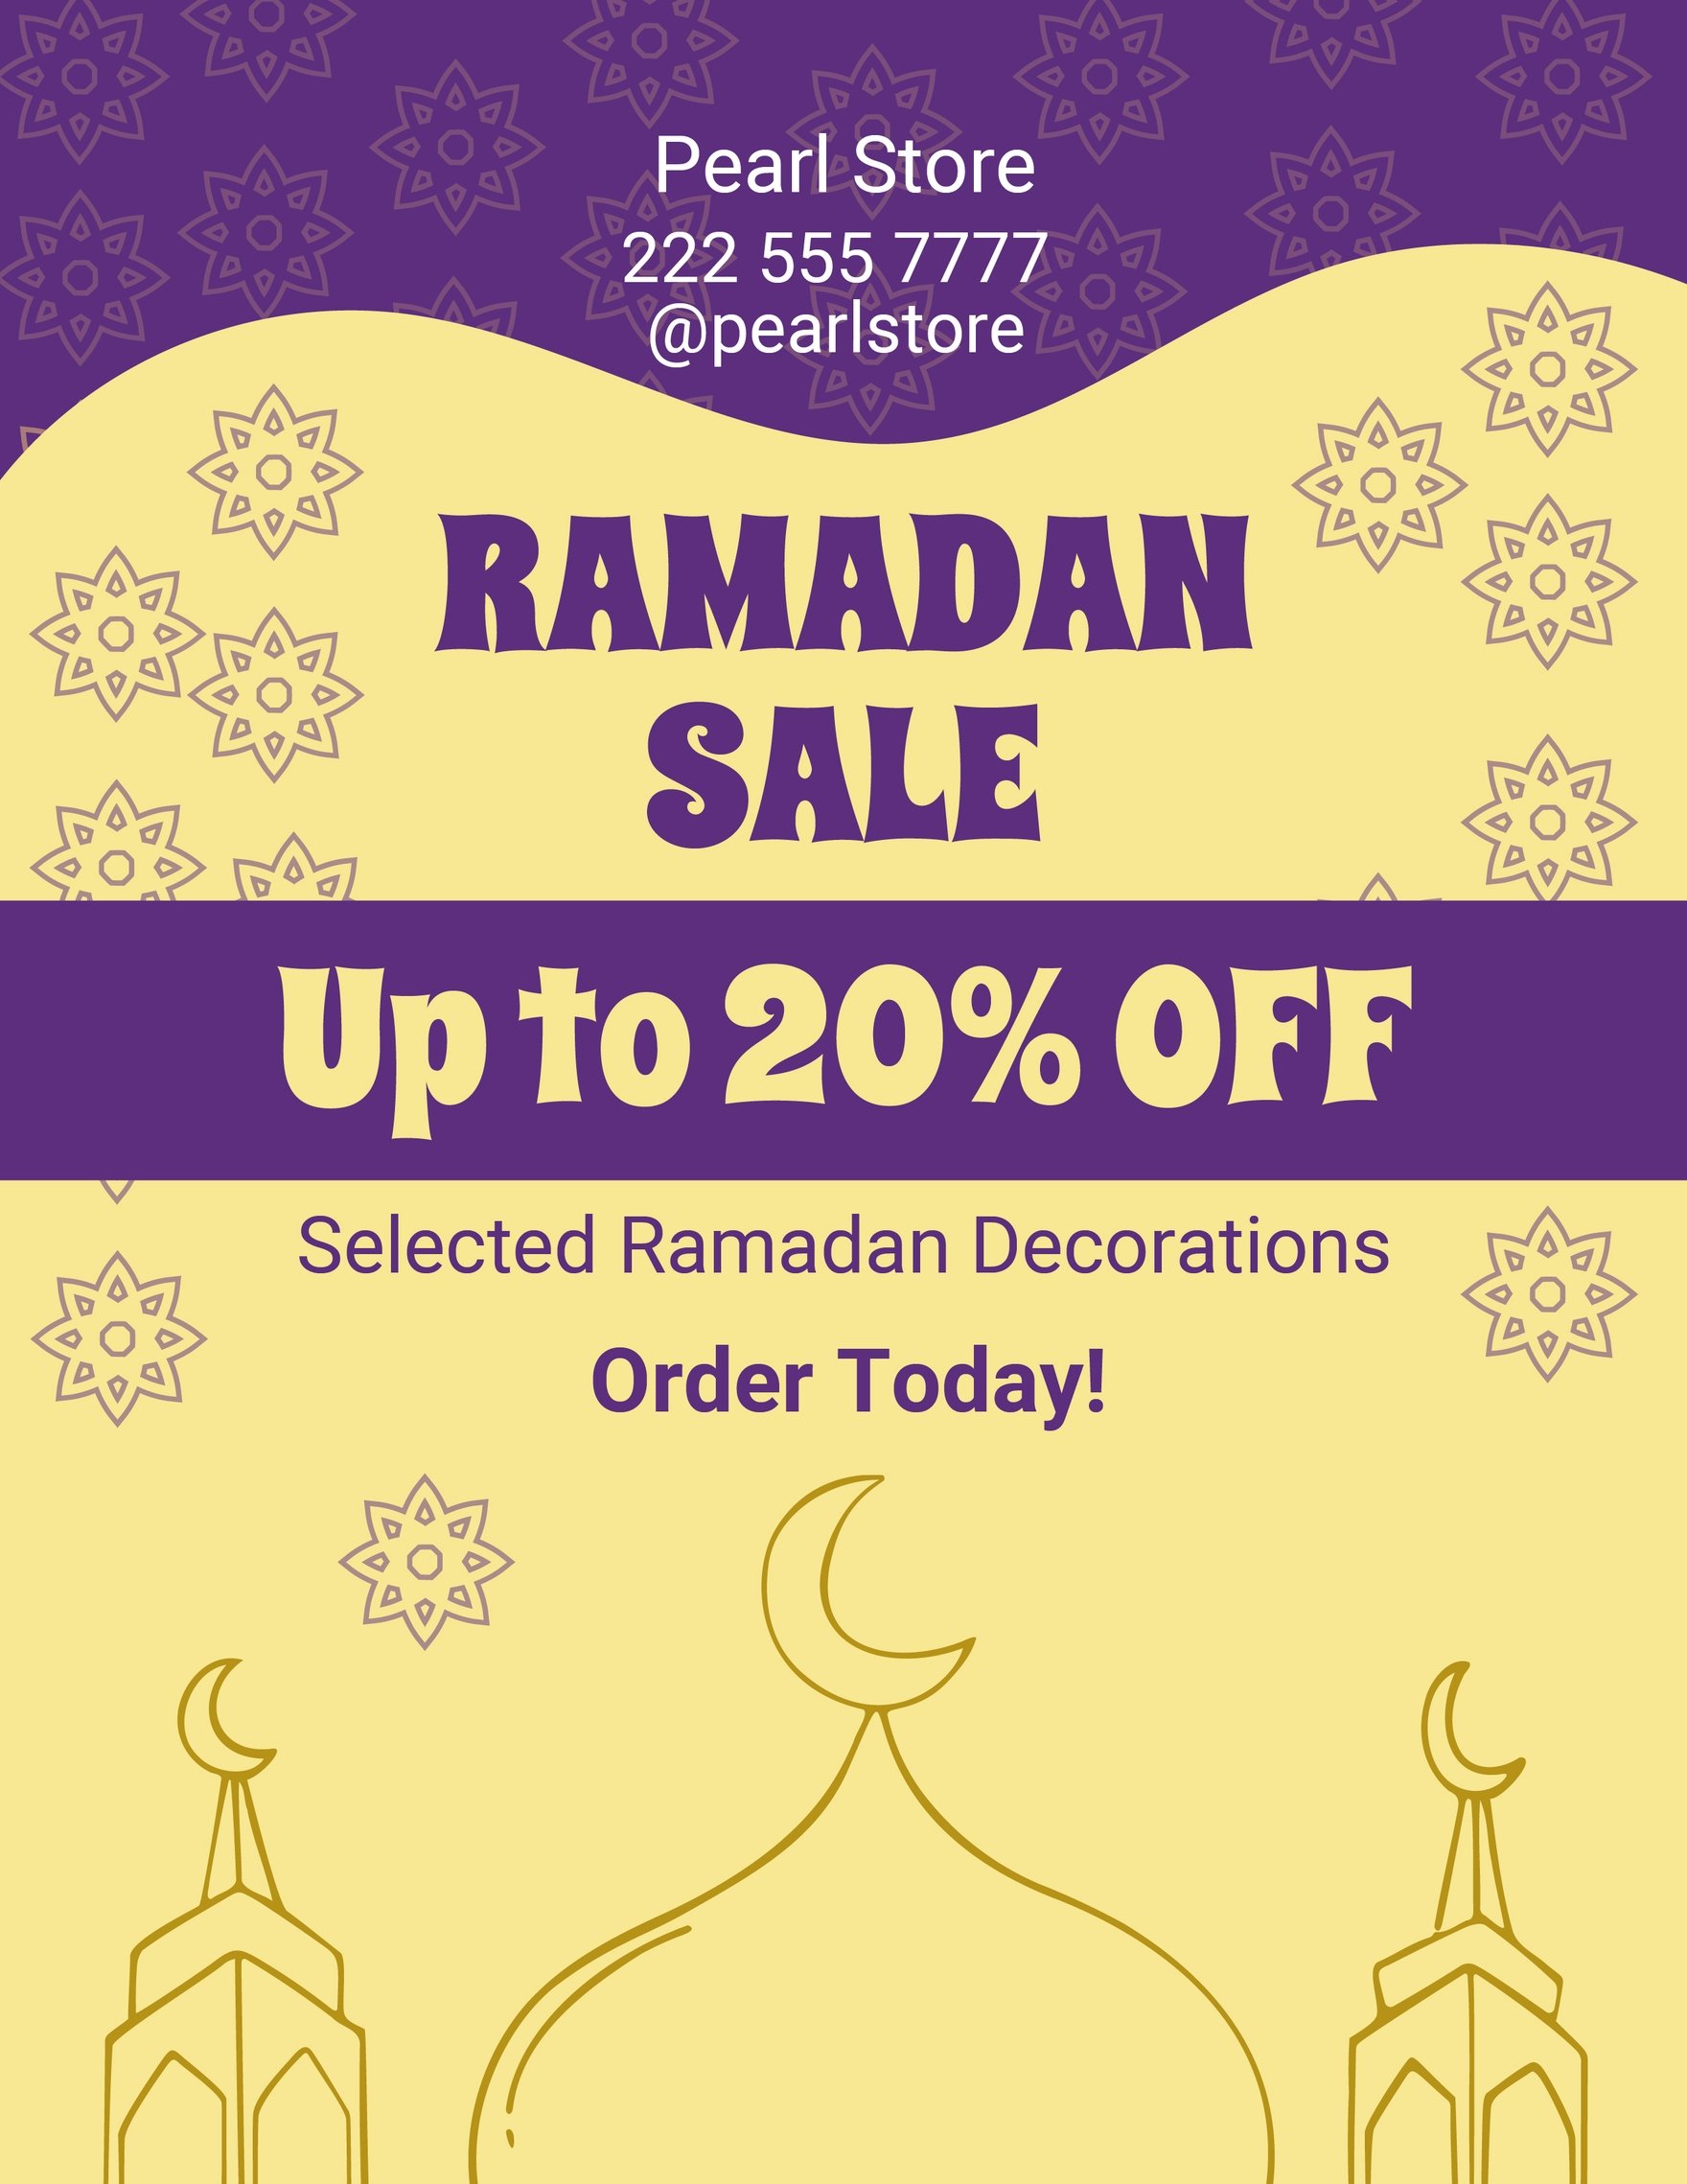 Creative Ramadan Flyer in Word, Google Docs, Illustrator, PSD, Apple Pages, Publisher, EPS, SVG, JPG, PNG